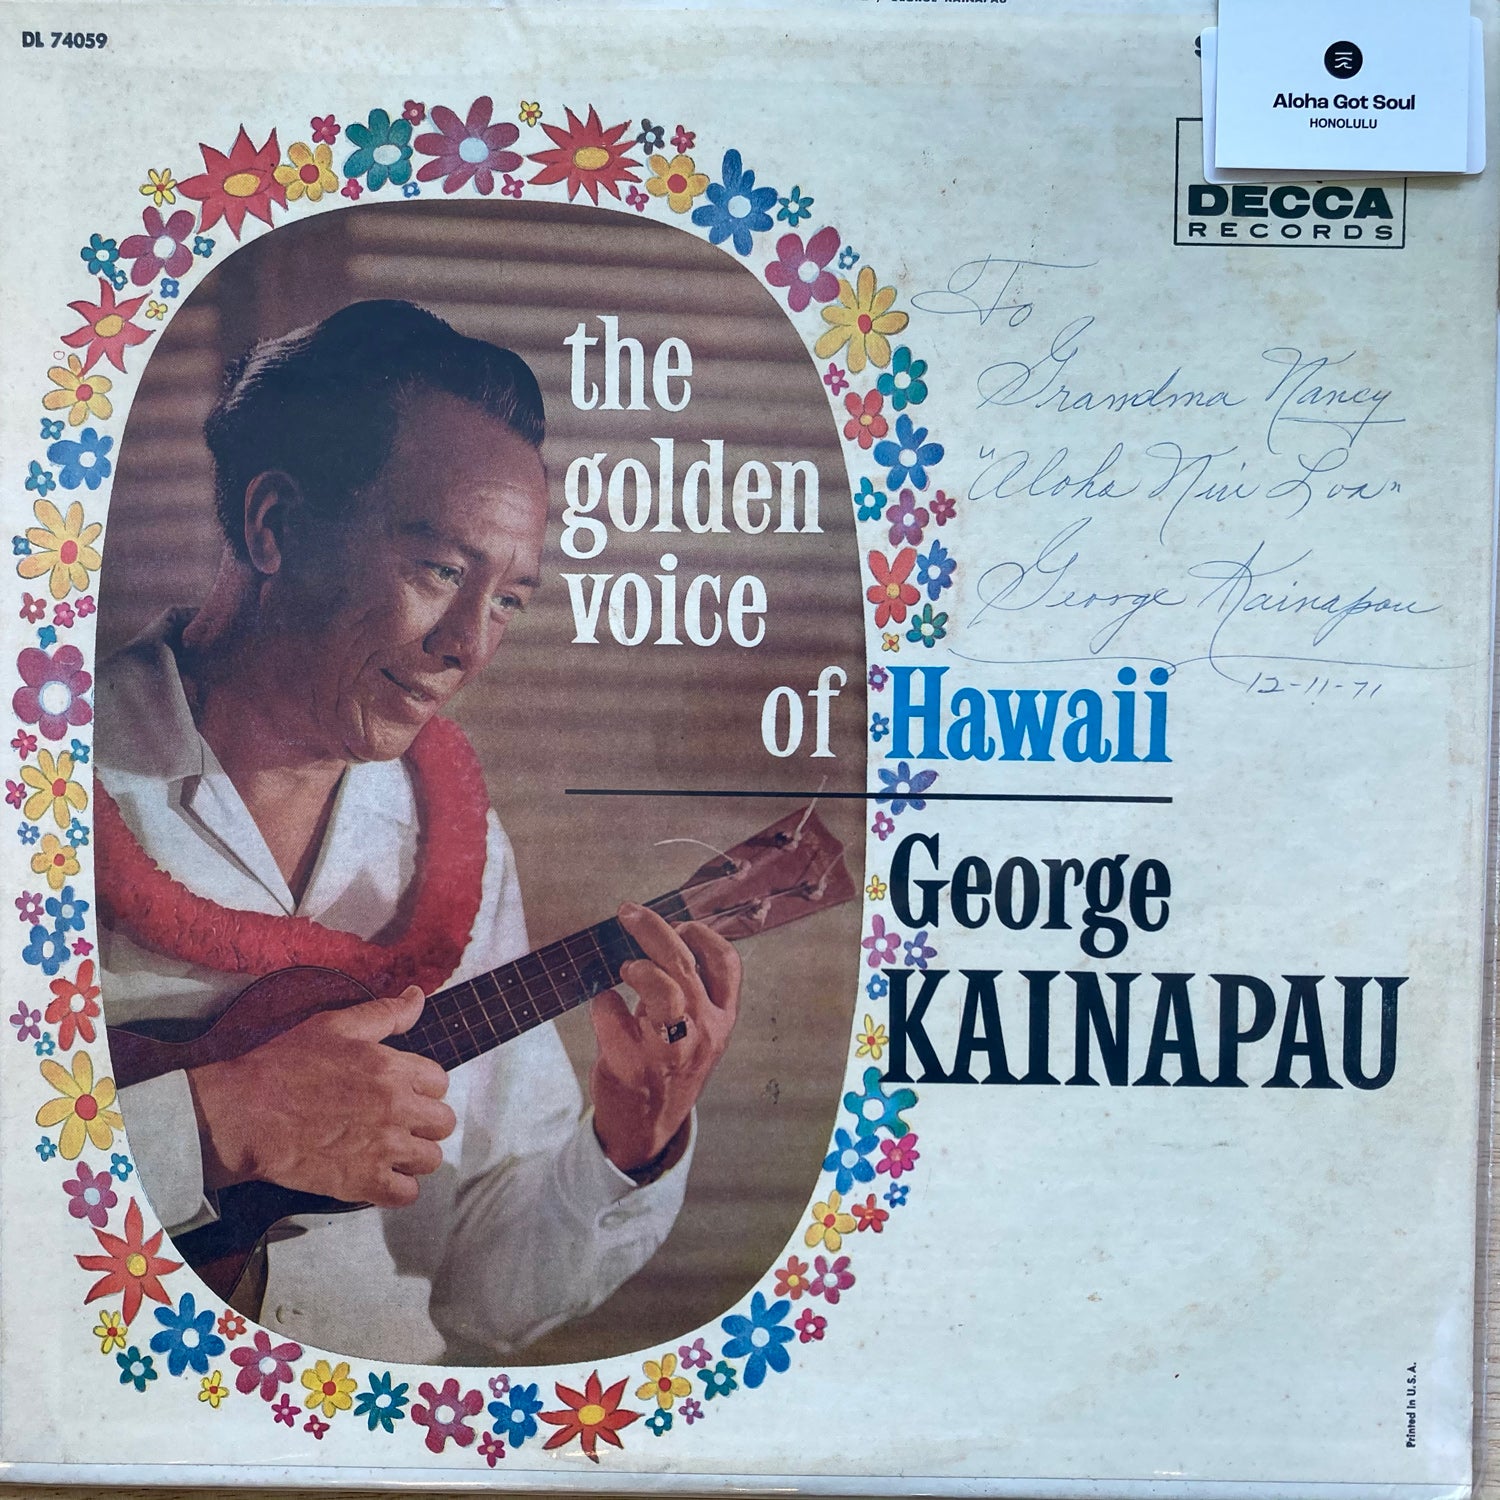 George Kainapau - The Golden Voice of Hawaii